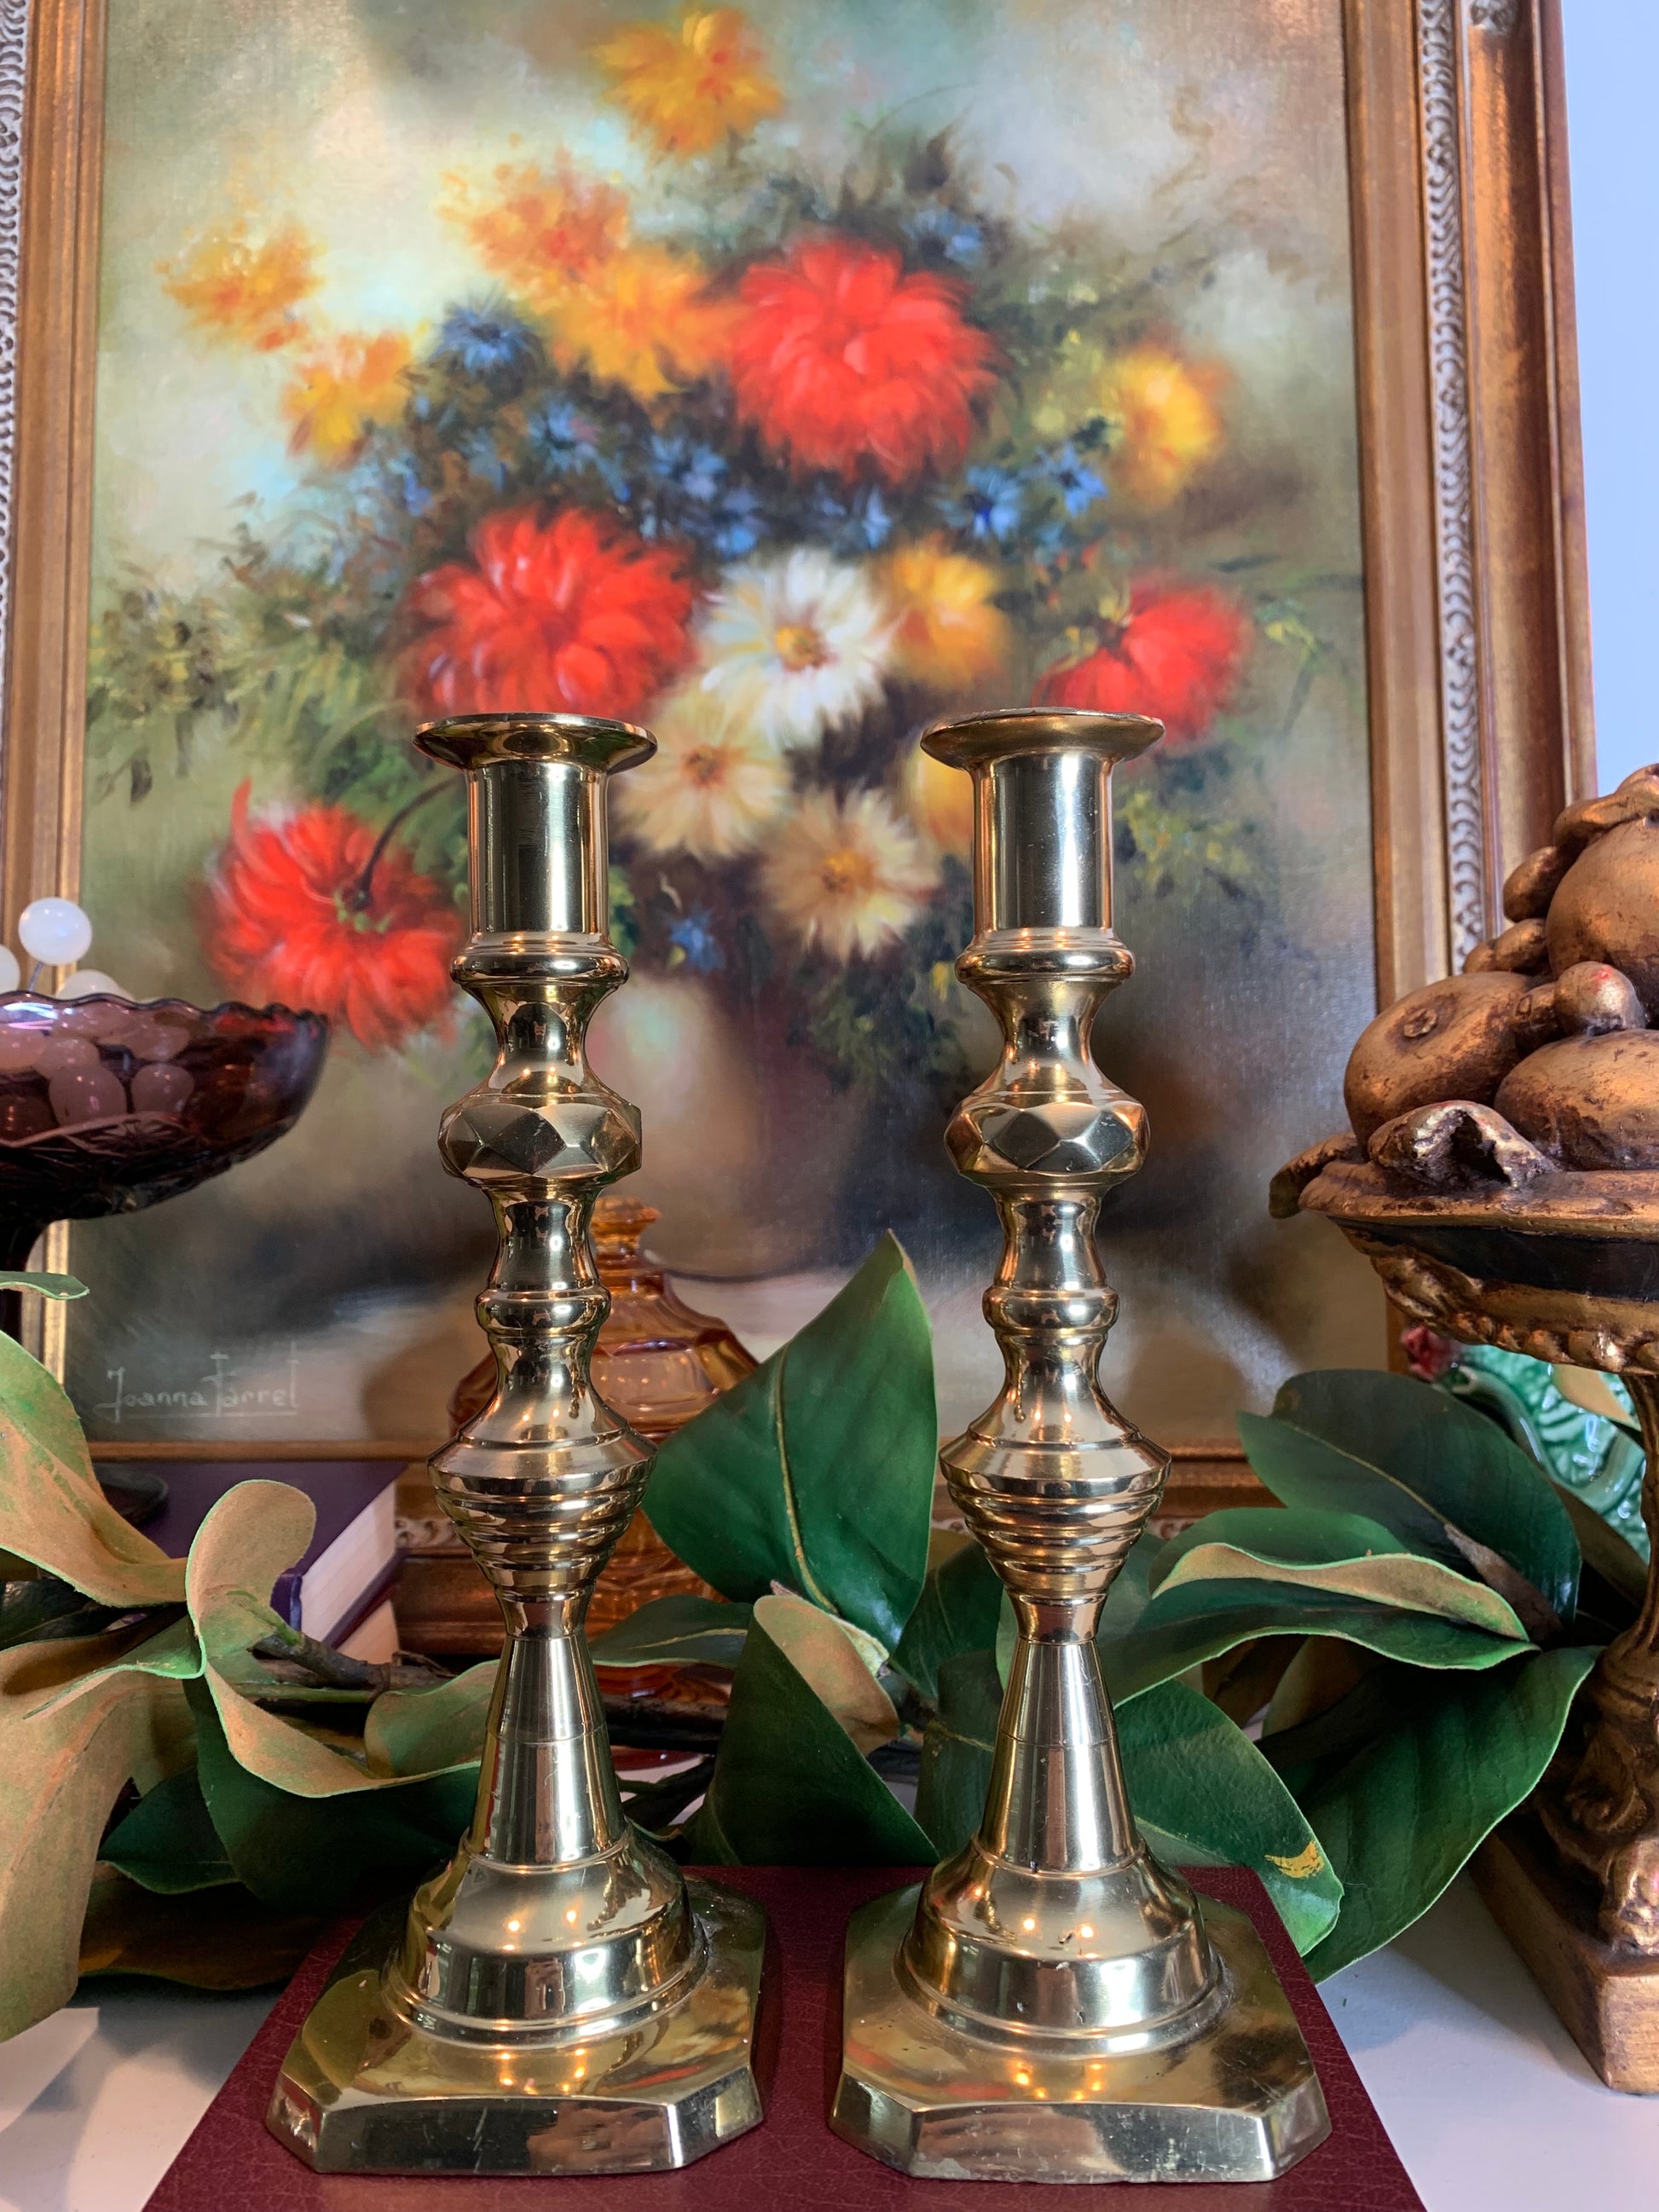 Vintage Brass Candlestick Holders, Vintage Holiday Table Decor